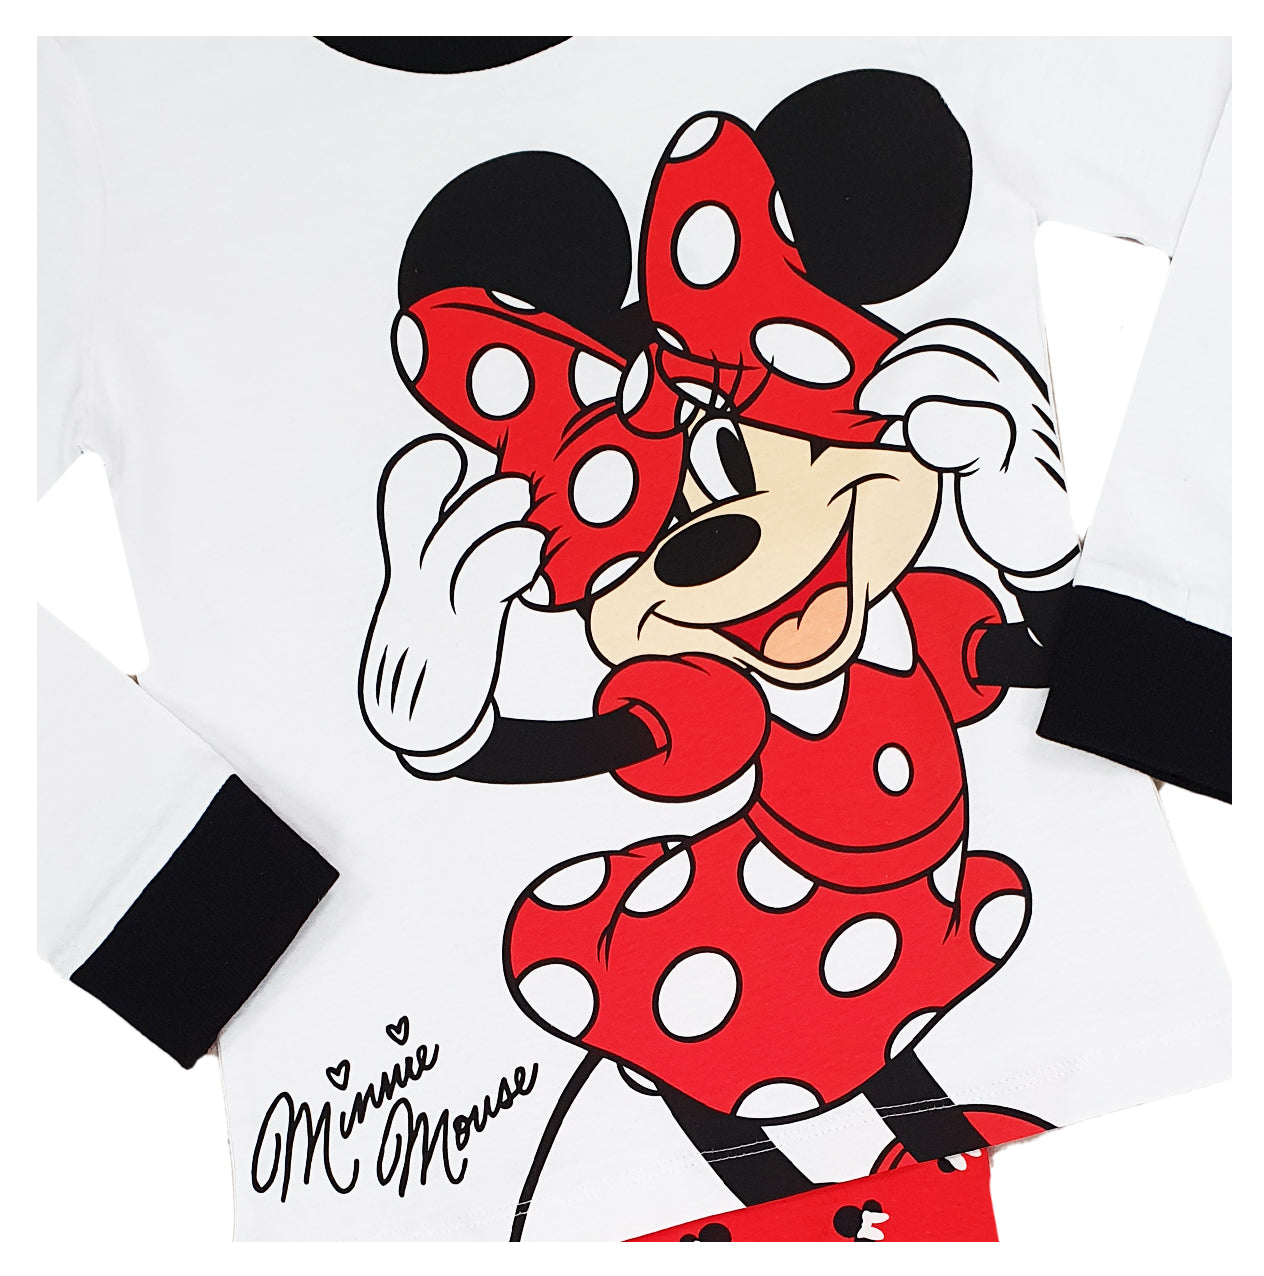 Girls Disney Minnie Mouse Pyjamas and Dressing Gown Set Bundle